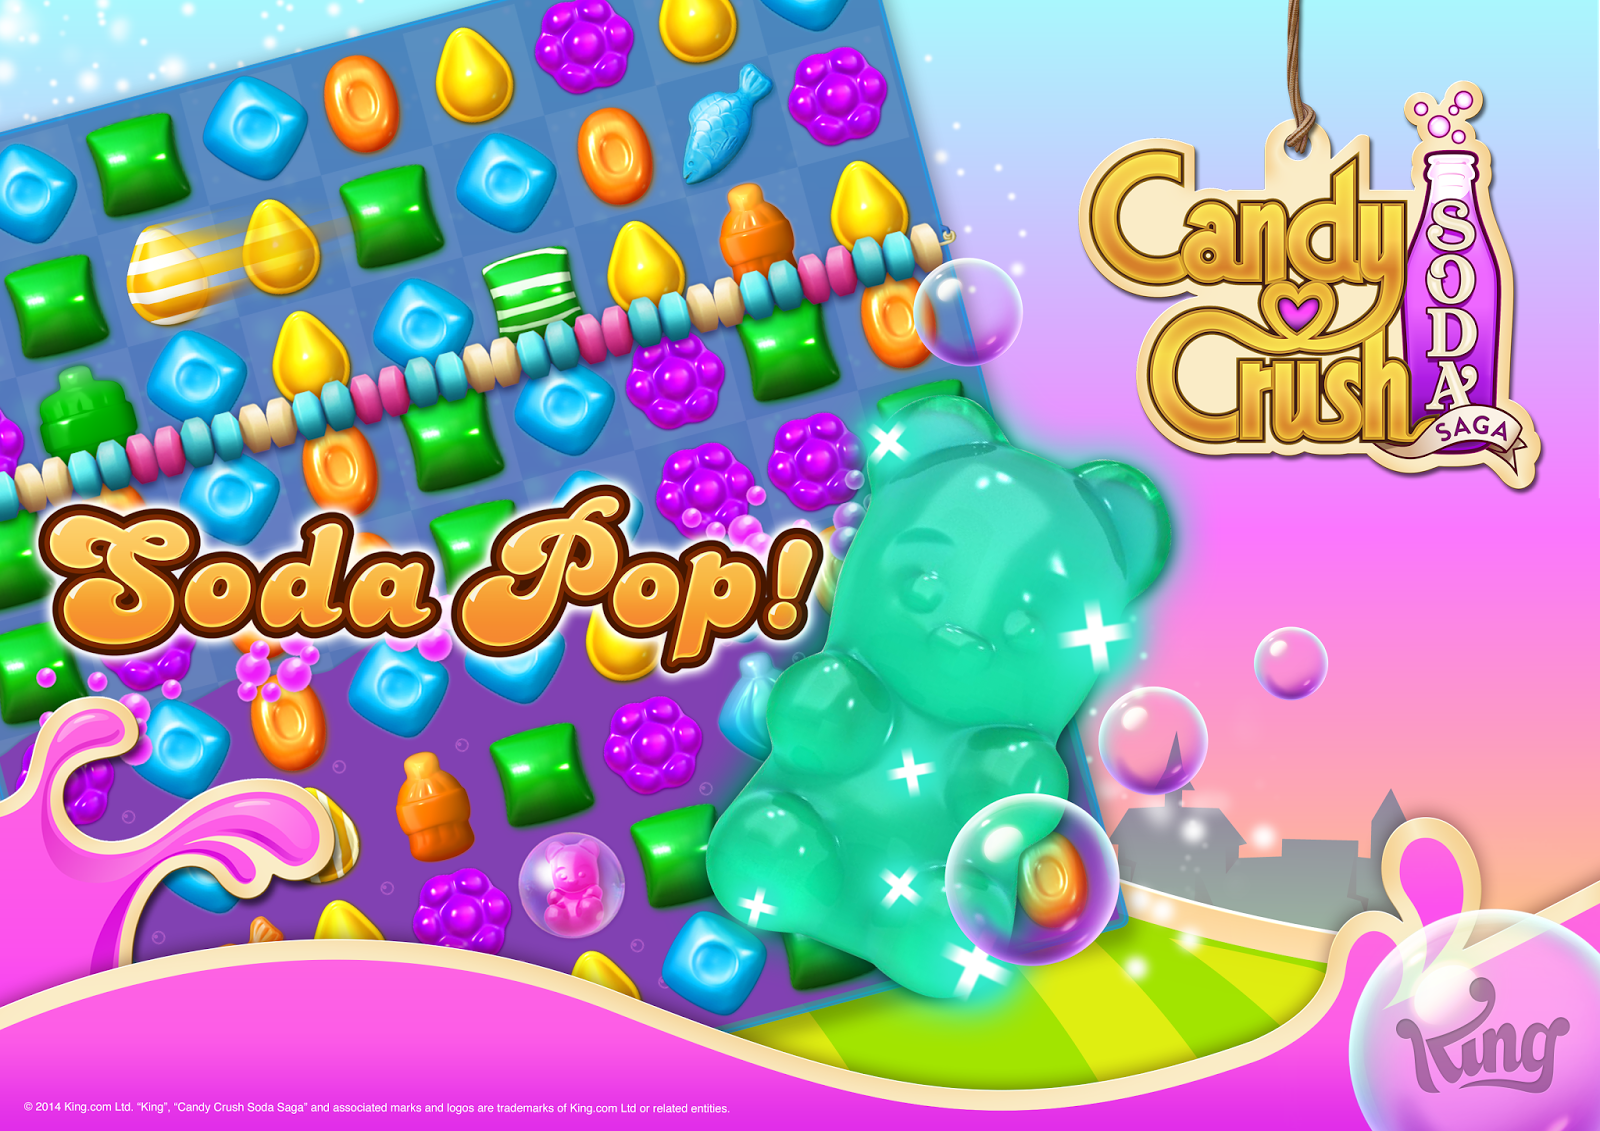 Candy crush 551